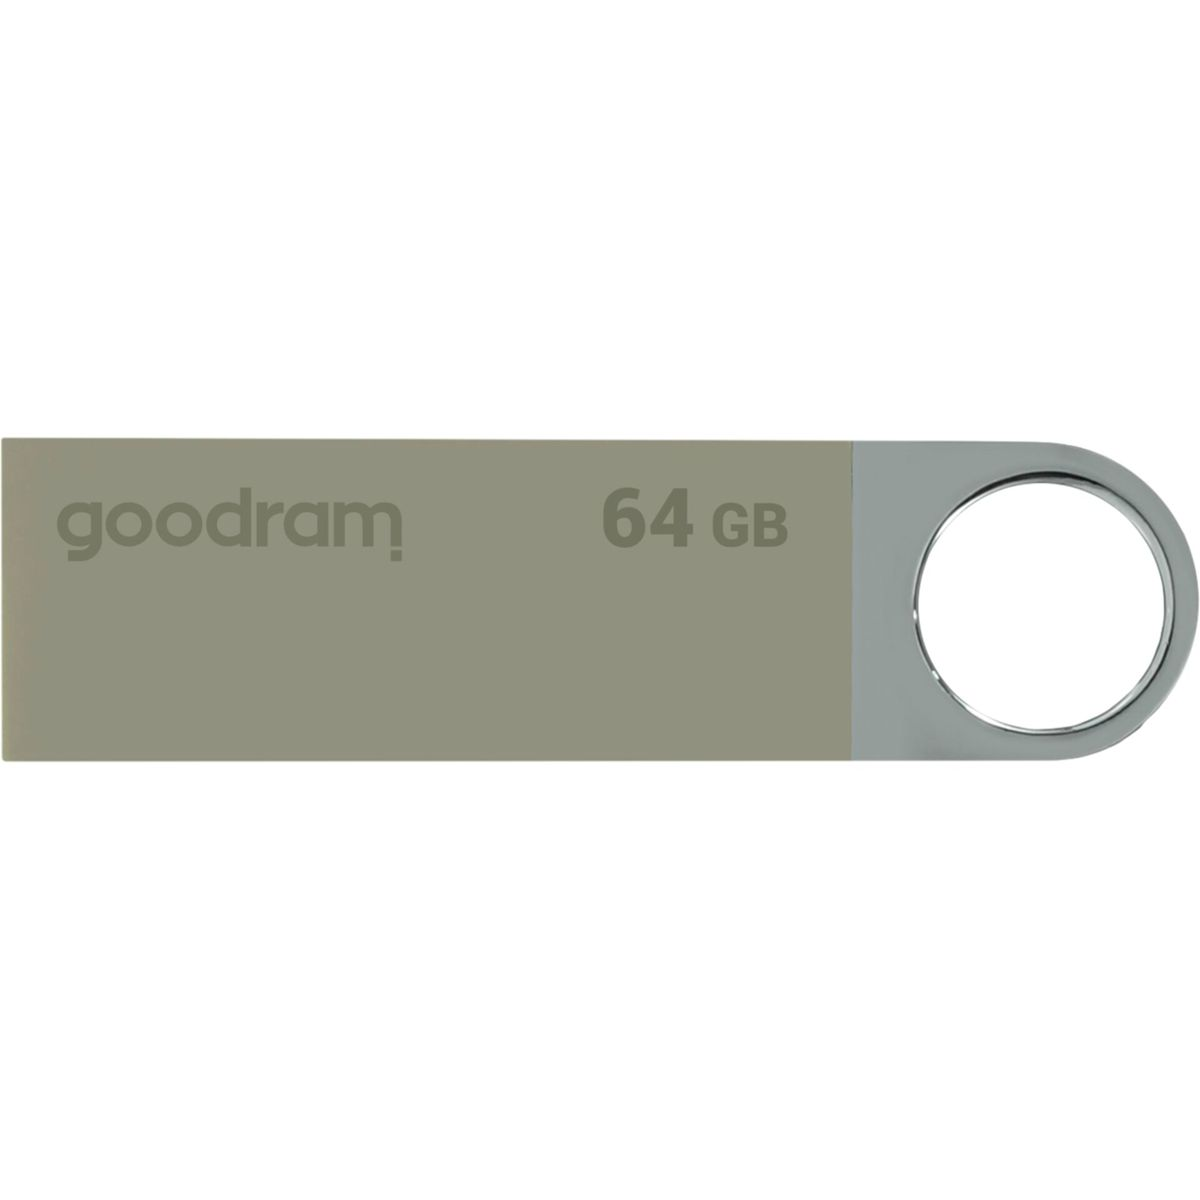 GOODRAM UUN2 USB 2.0 Stick Silver 64 GB) (silber, 64GB USB